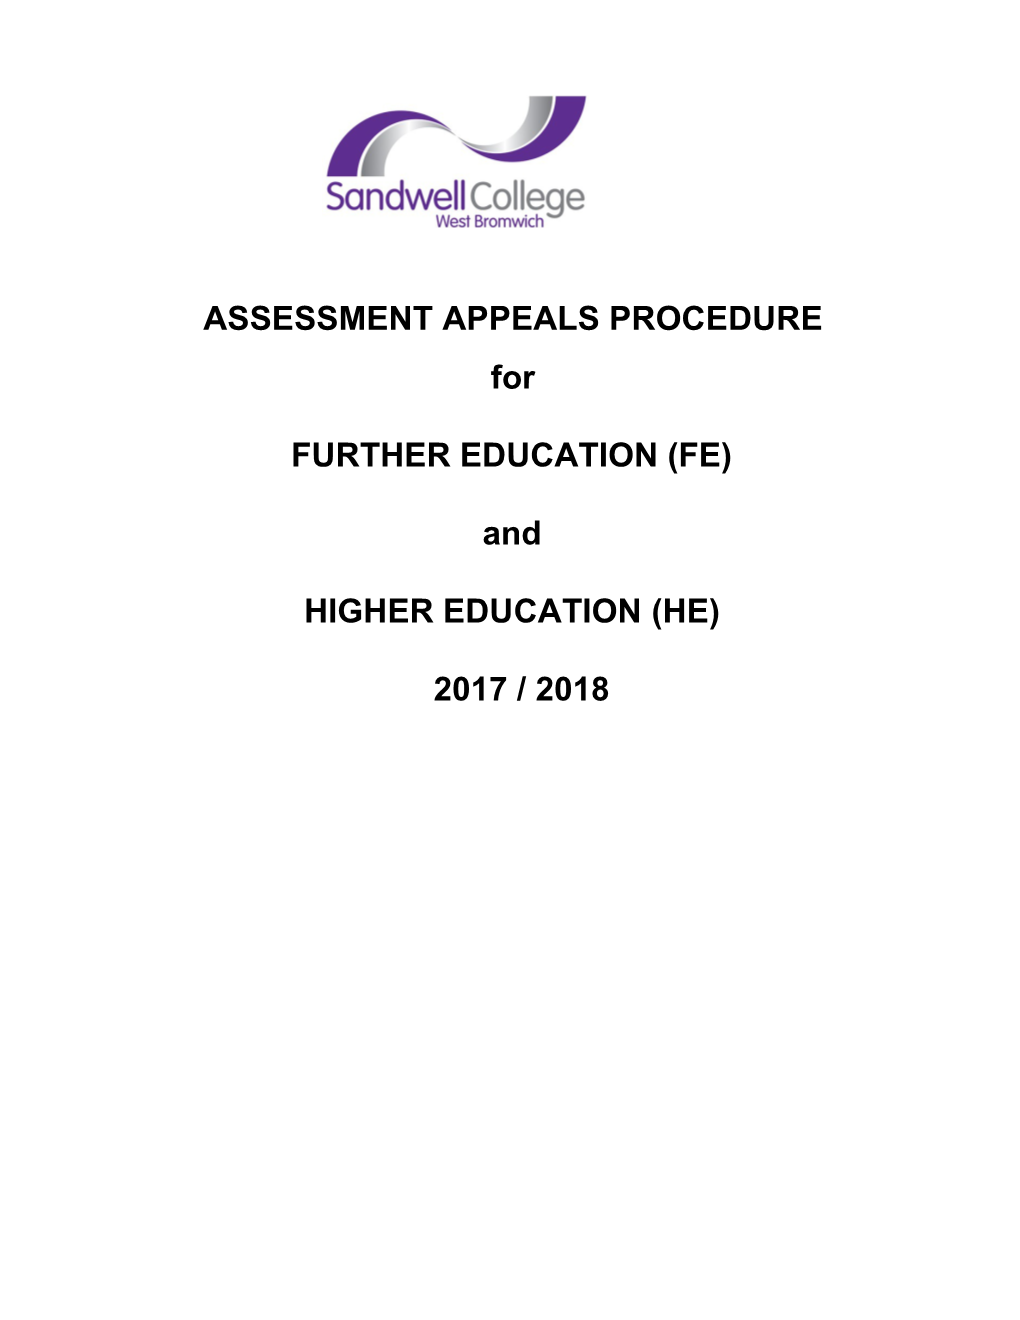 Assessment Appealsprocedure